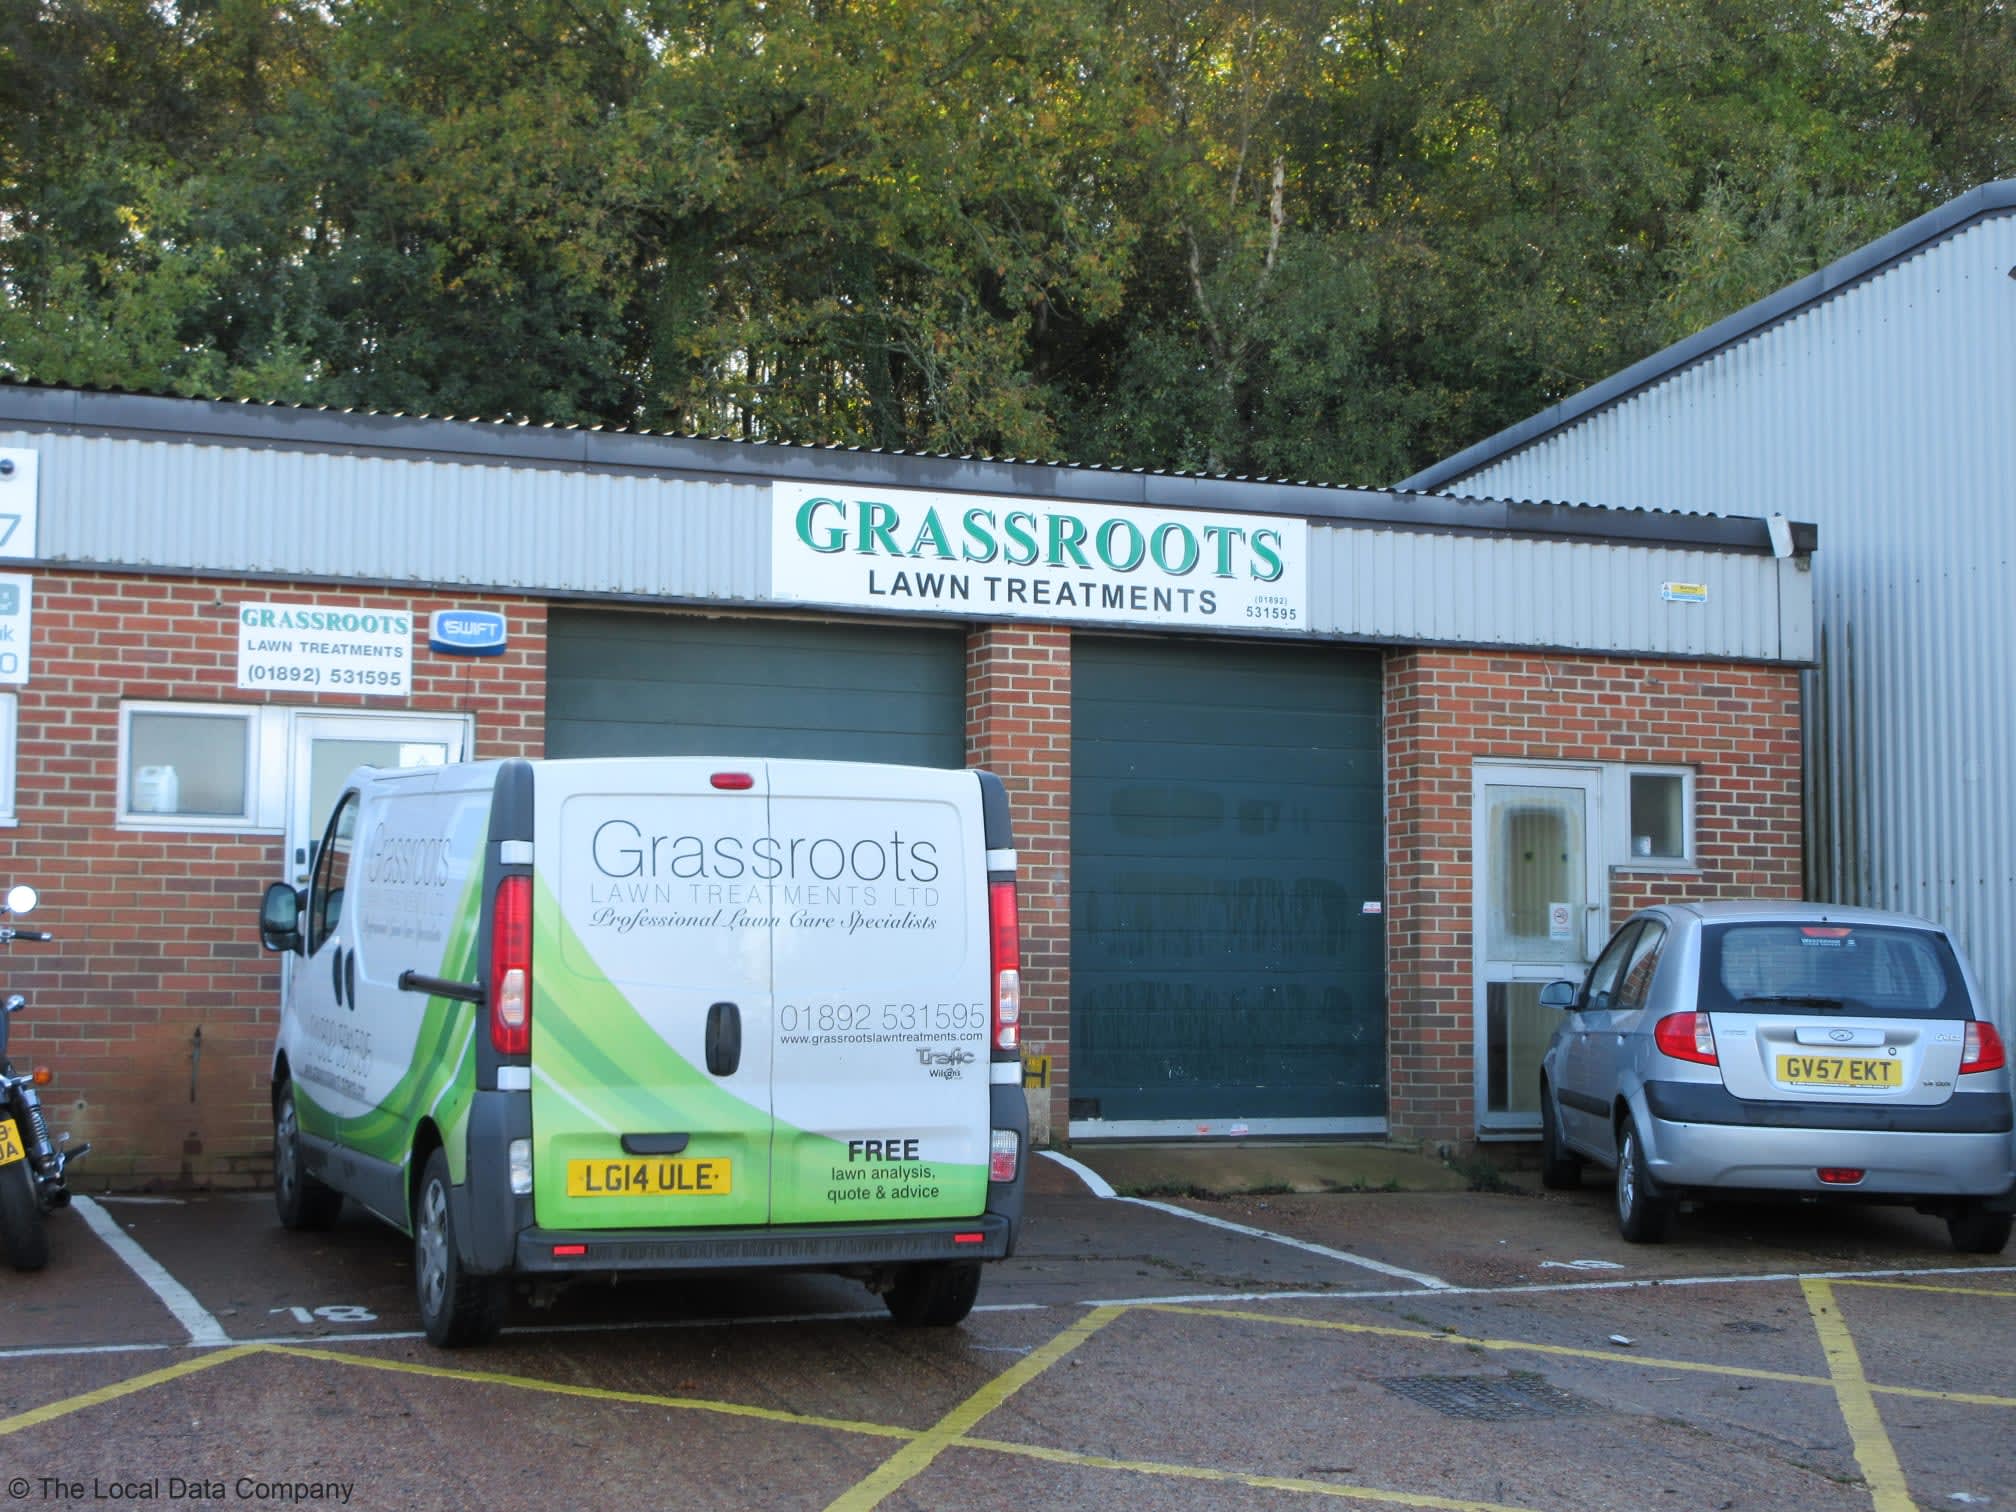 Images Grassroots Lawn Treatments Ltd